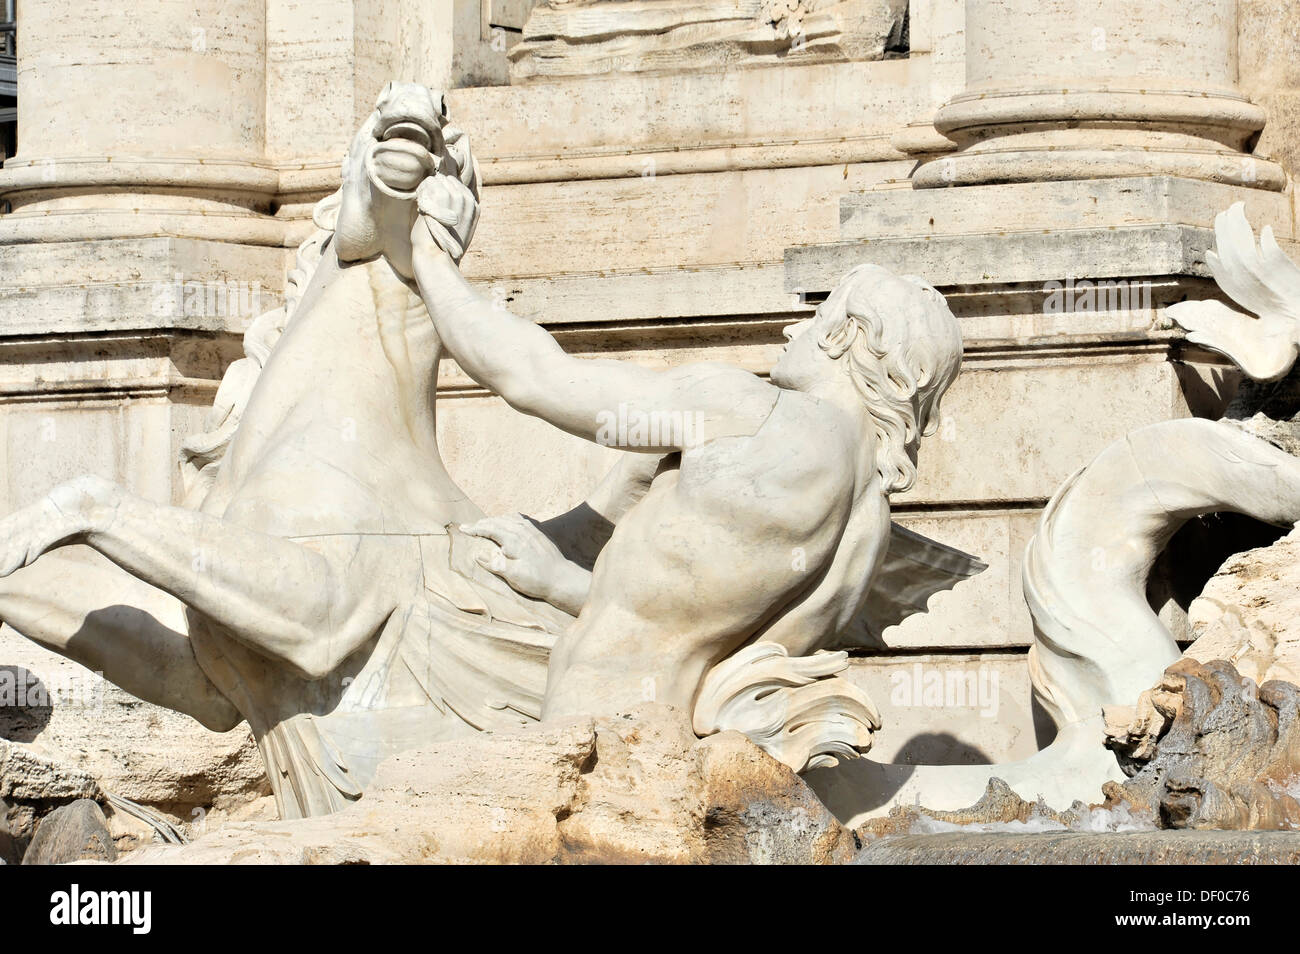 Detail view of the statue "Horse with Triton", Trevi Fountain, Fontana di Trevi, Rome, Lazio, Italy, Europe Stock Photo